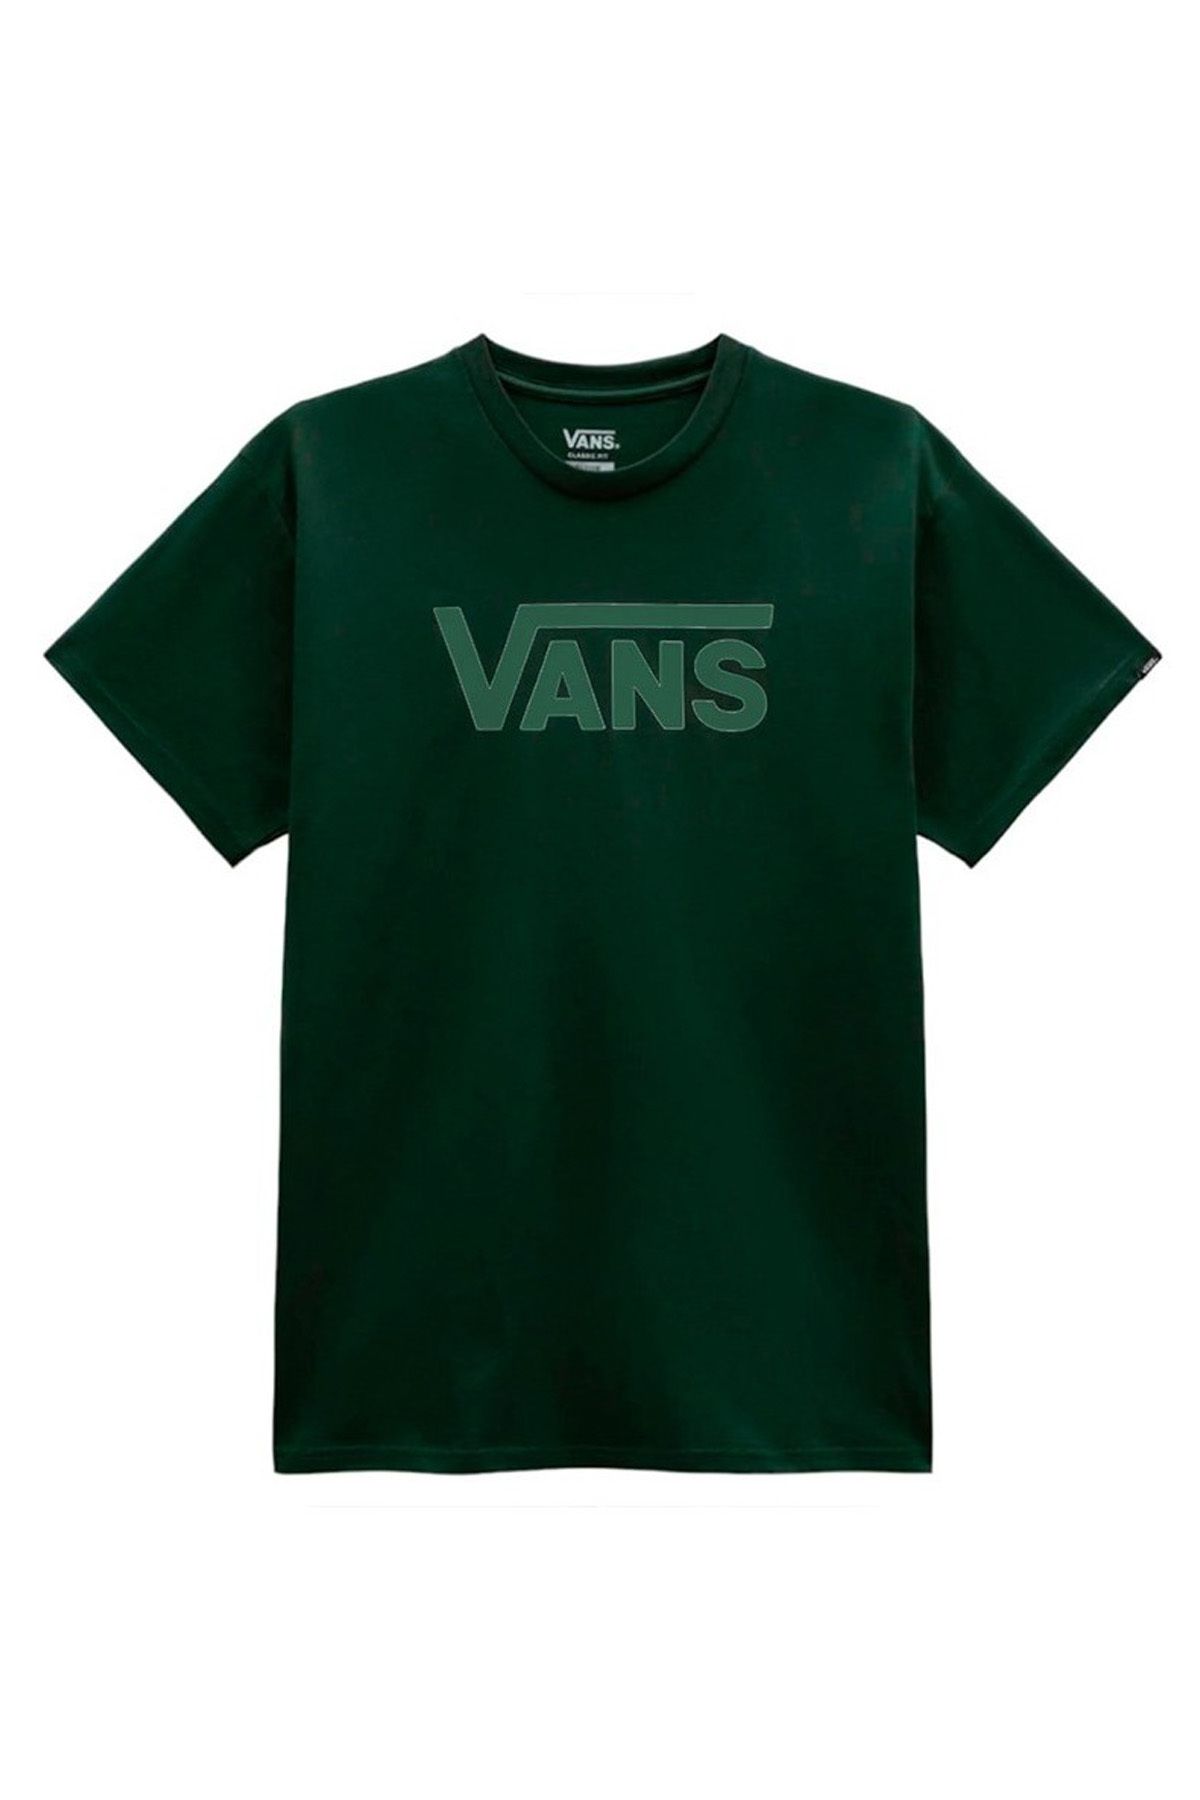 Vans Classic Vans Tee-B Unisex T-Shirt - VN0A7Y46